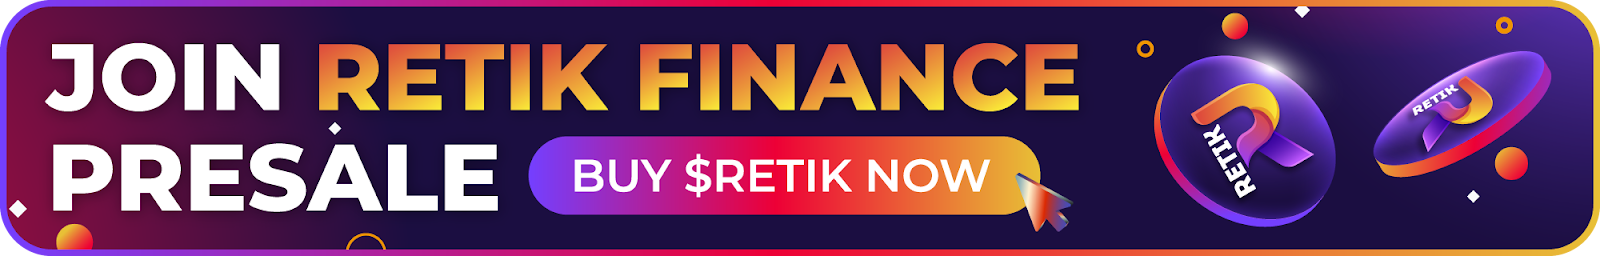 retik-finance